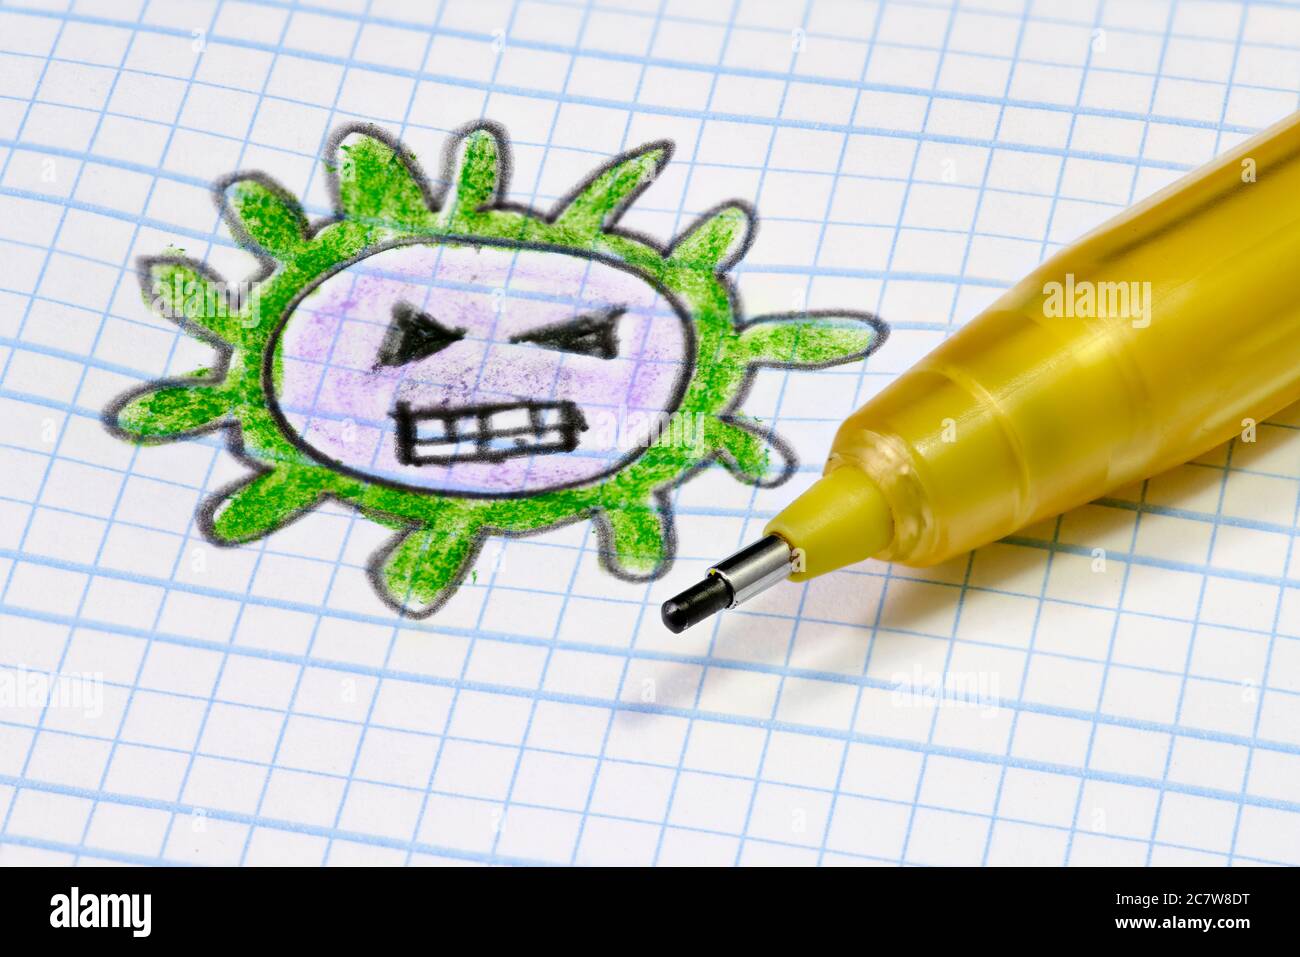 covid virus (orthocoronavirinae) drawn with colored pencils on a school notebook Stock Photo